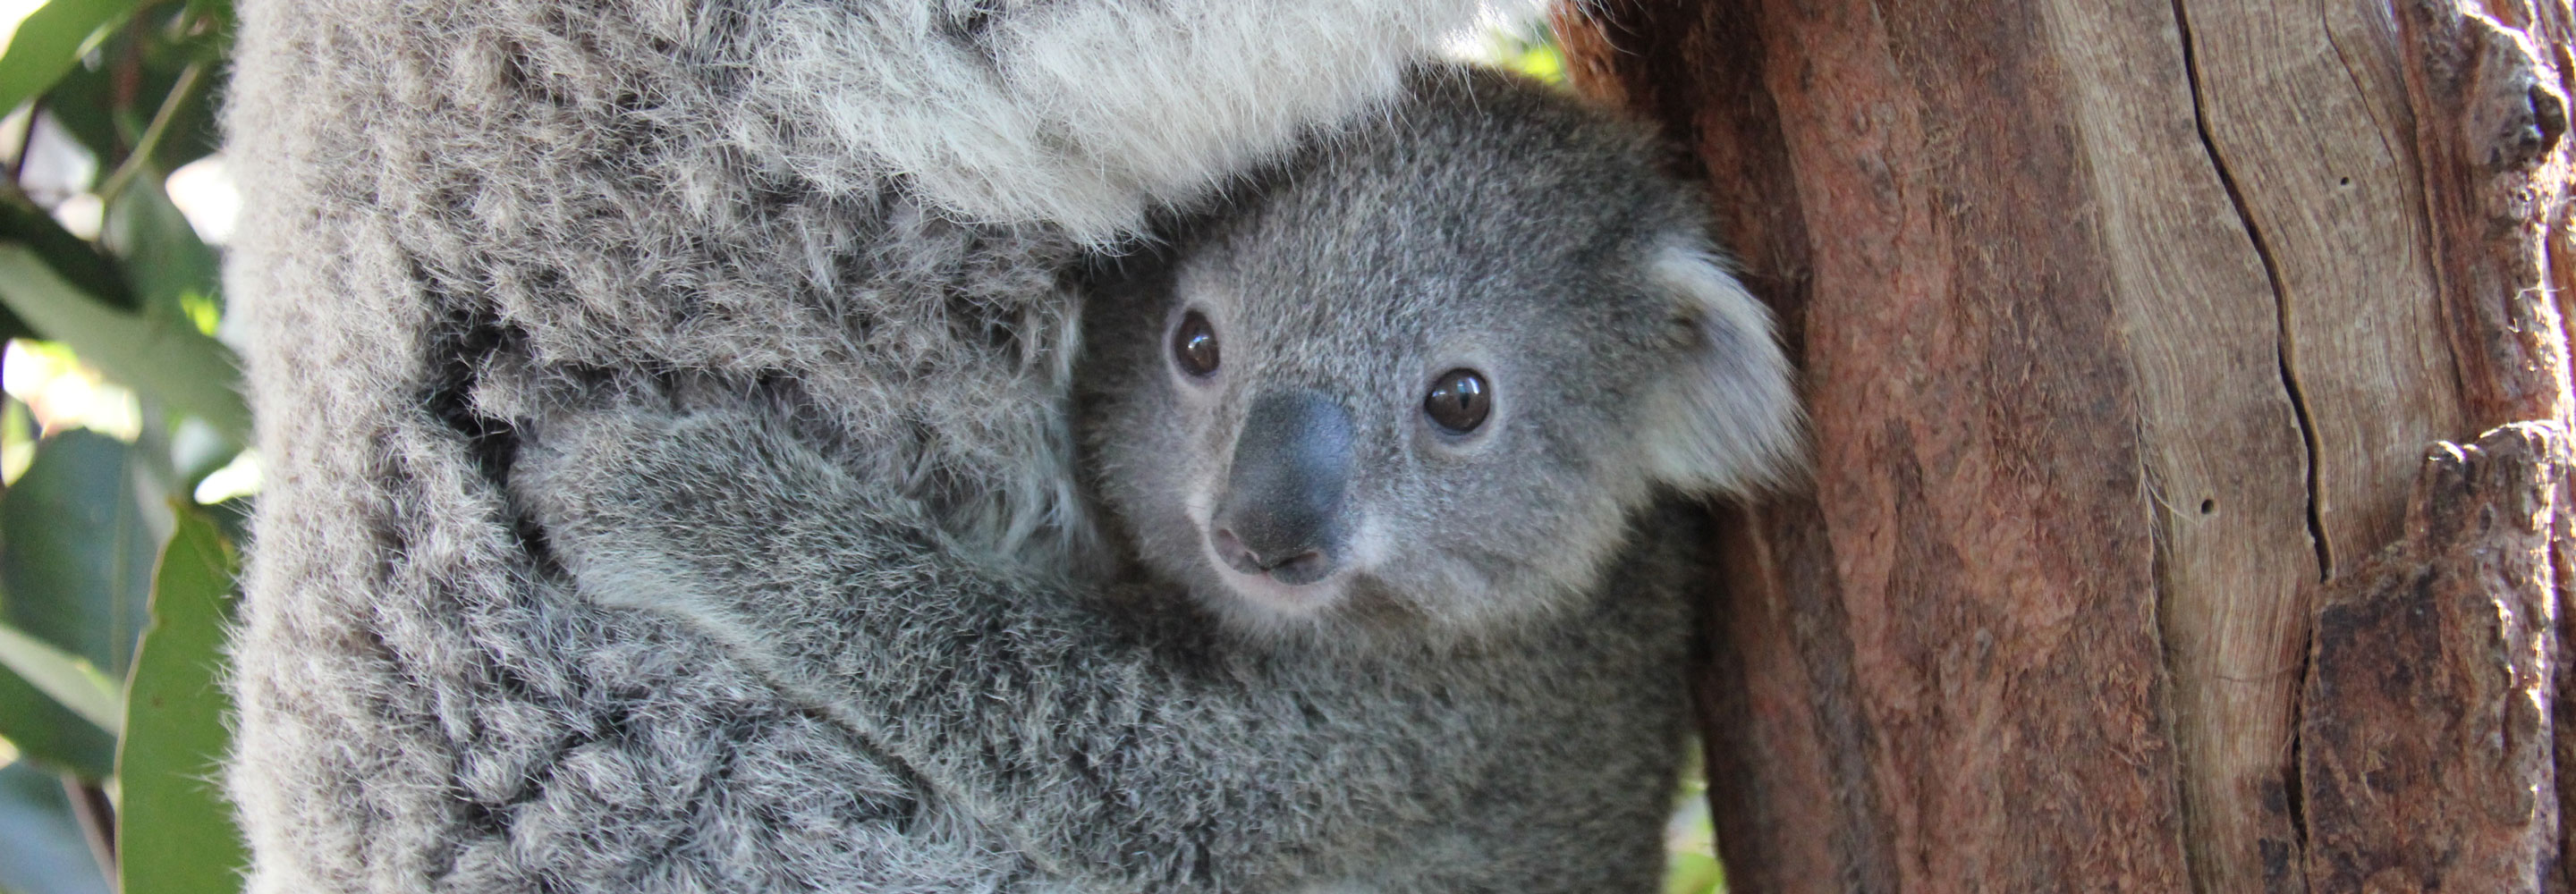 Koala's: Fun Facts & More - WILD LIFE Sydney Zoo